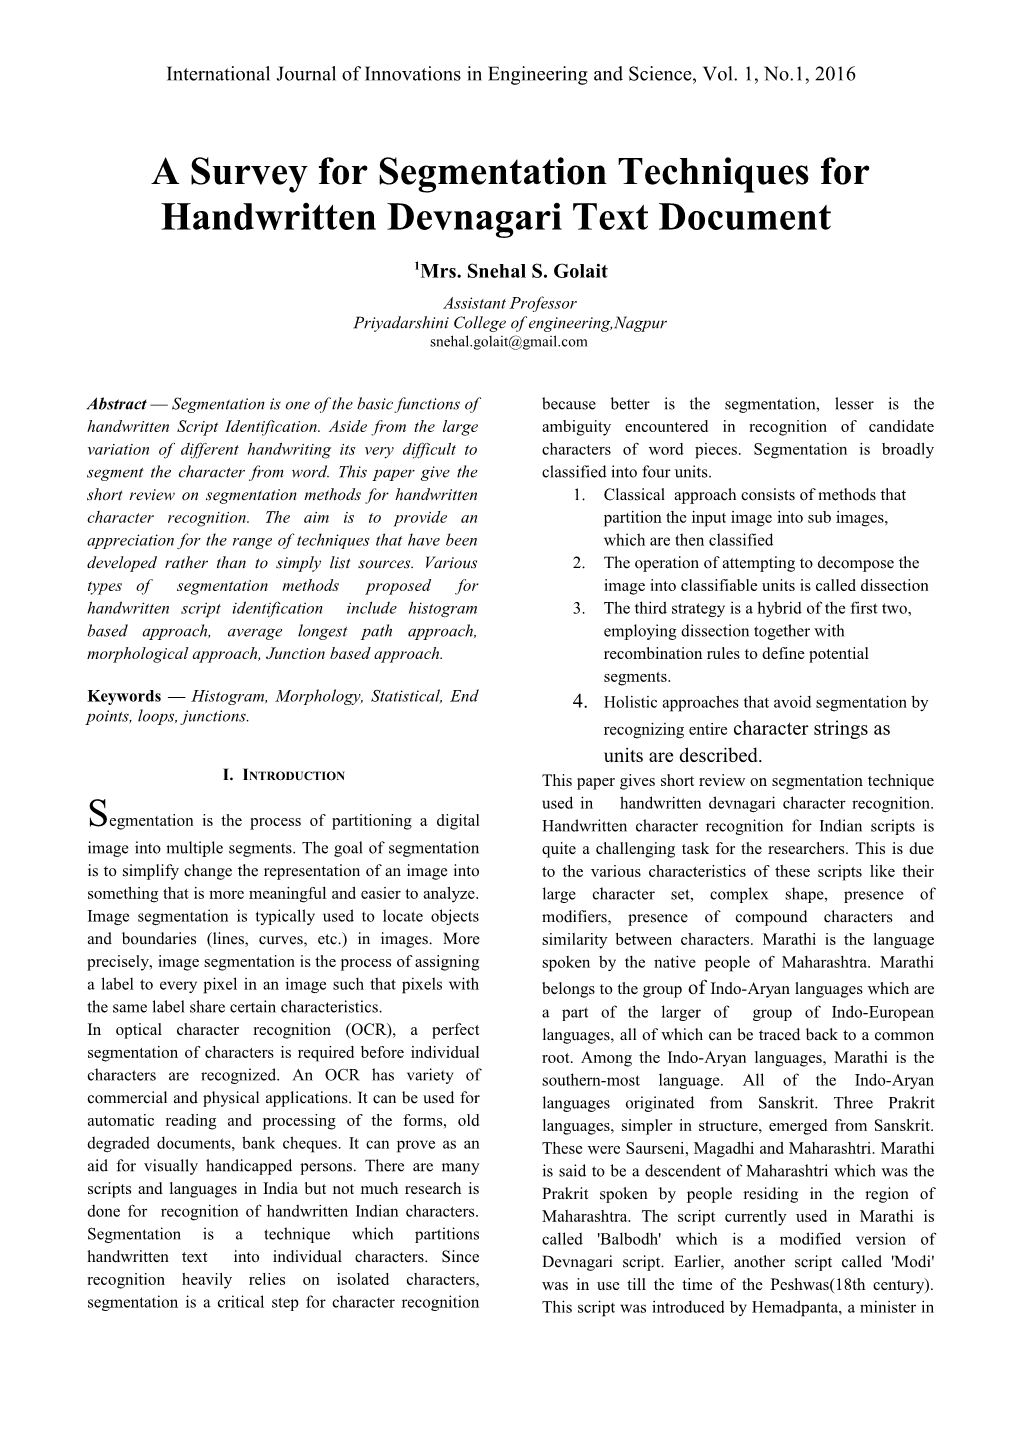 A Survey for Segmentation Techniques for Handwritten Devnagari Text Document